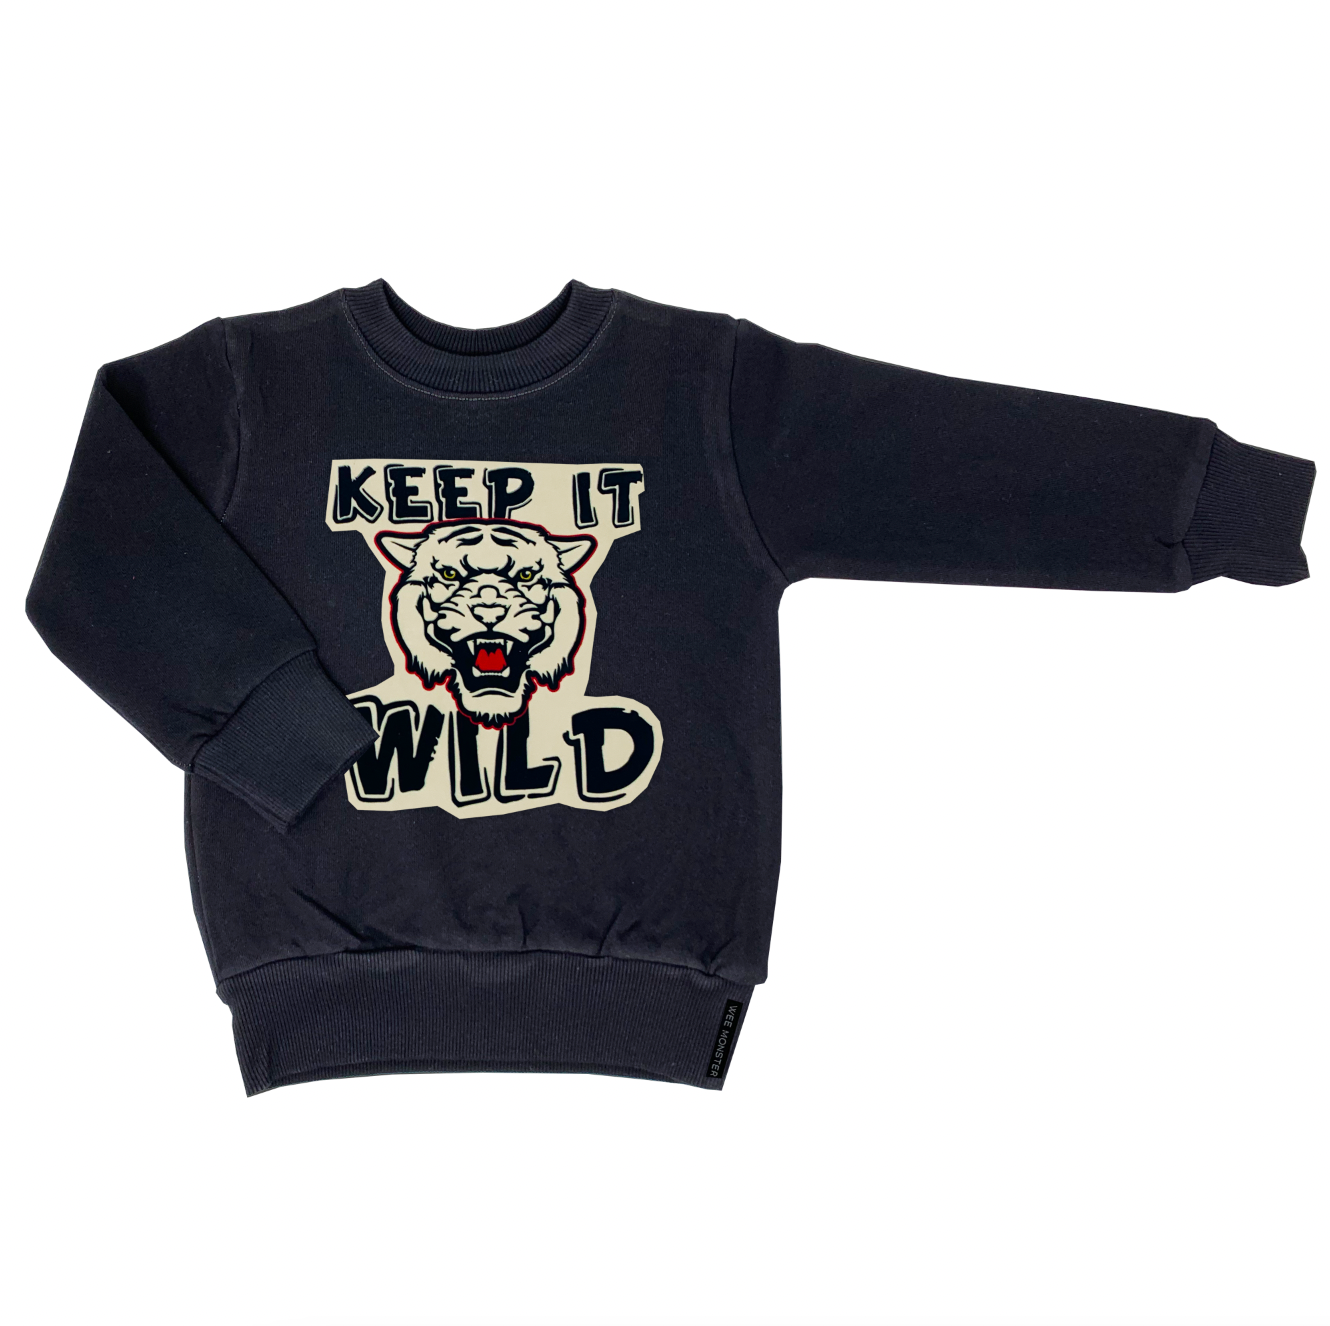 Keep It Wild Black Sweatshirt - Unisex for Boys and Girls